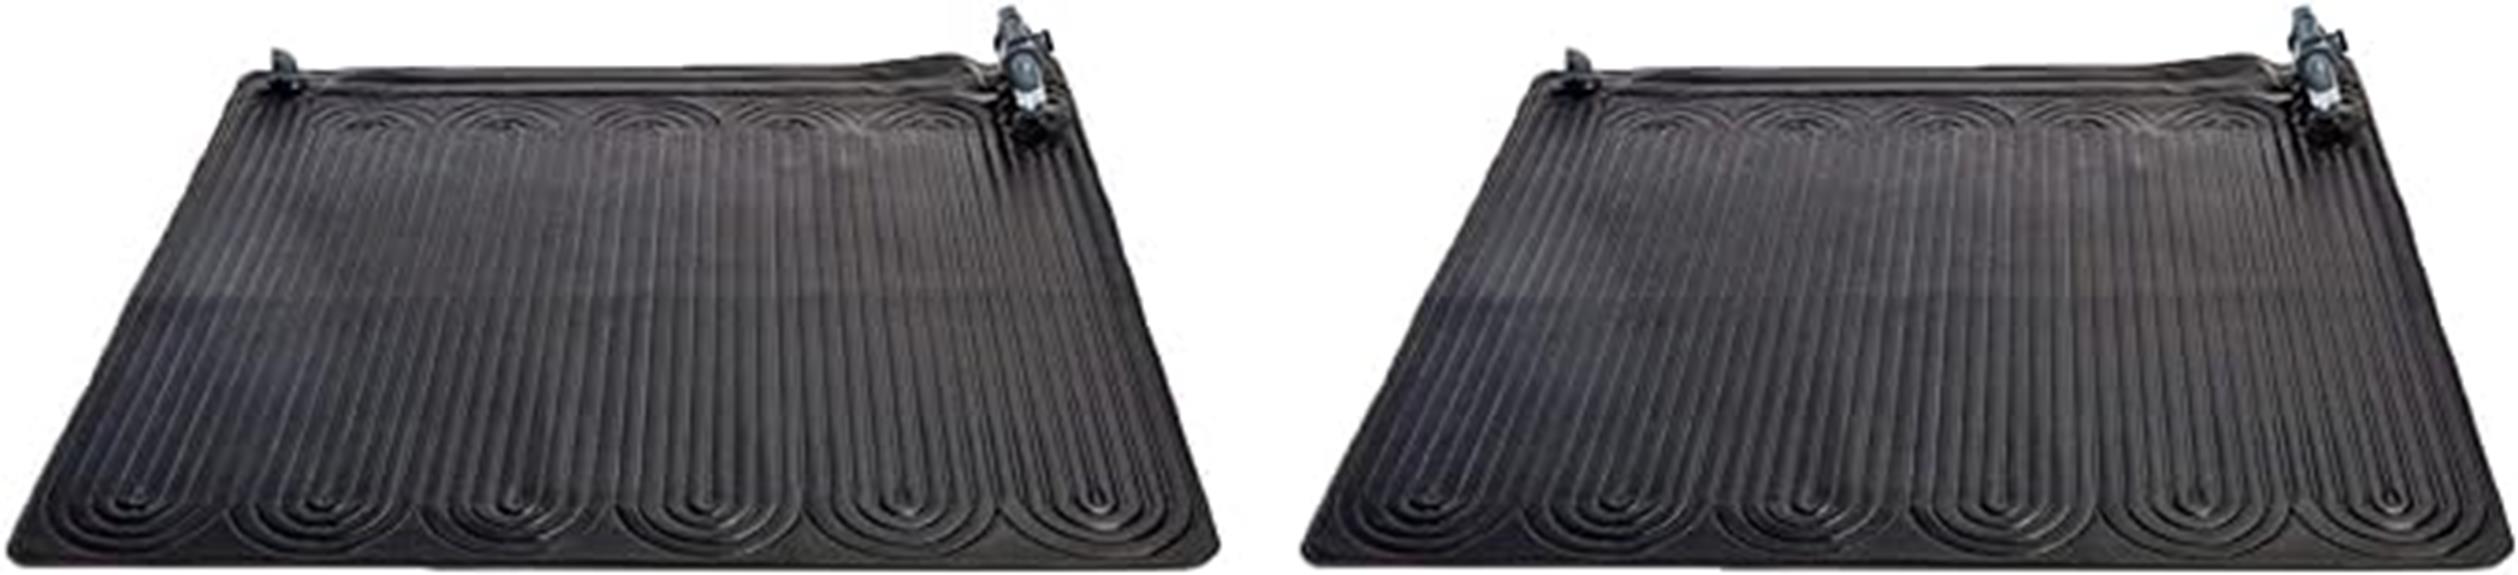 solar pool heater mat